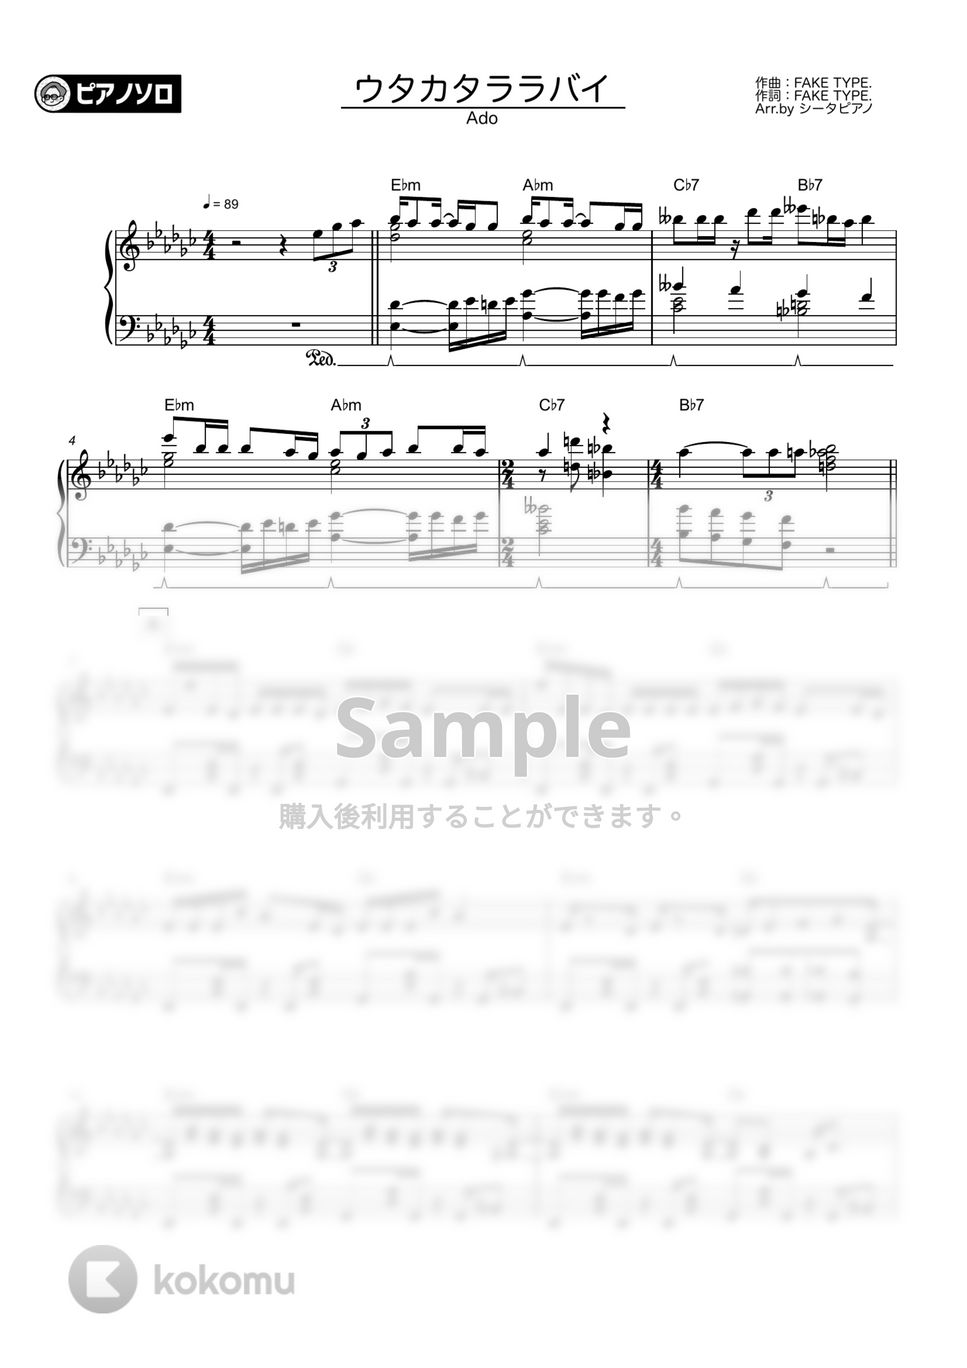 Ado - ウタカタララバイ by シータピアノ